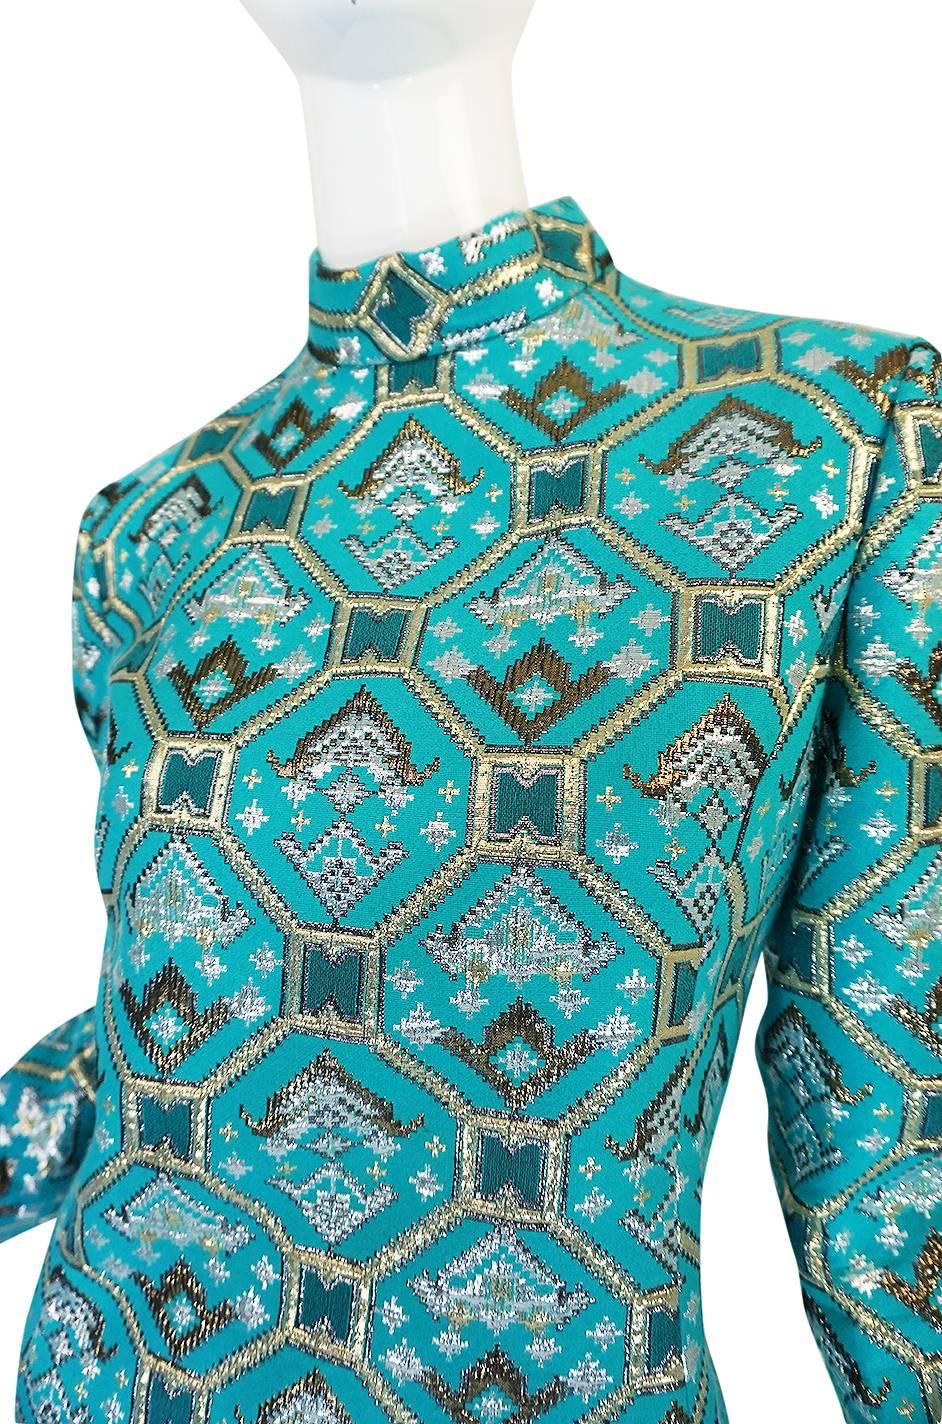 1970s Turquoise & Metallic Ikat Brocade Mollie Parnis Dress 1